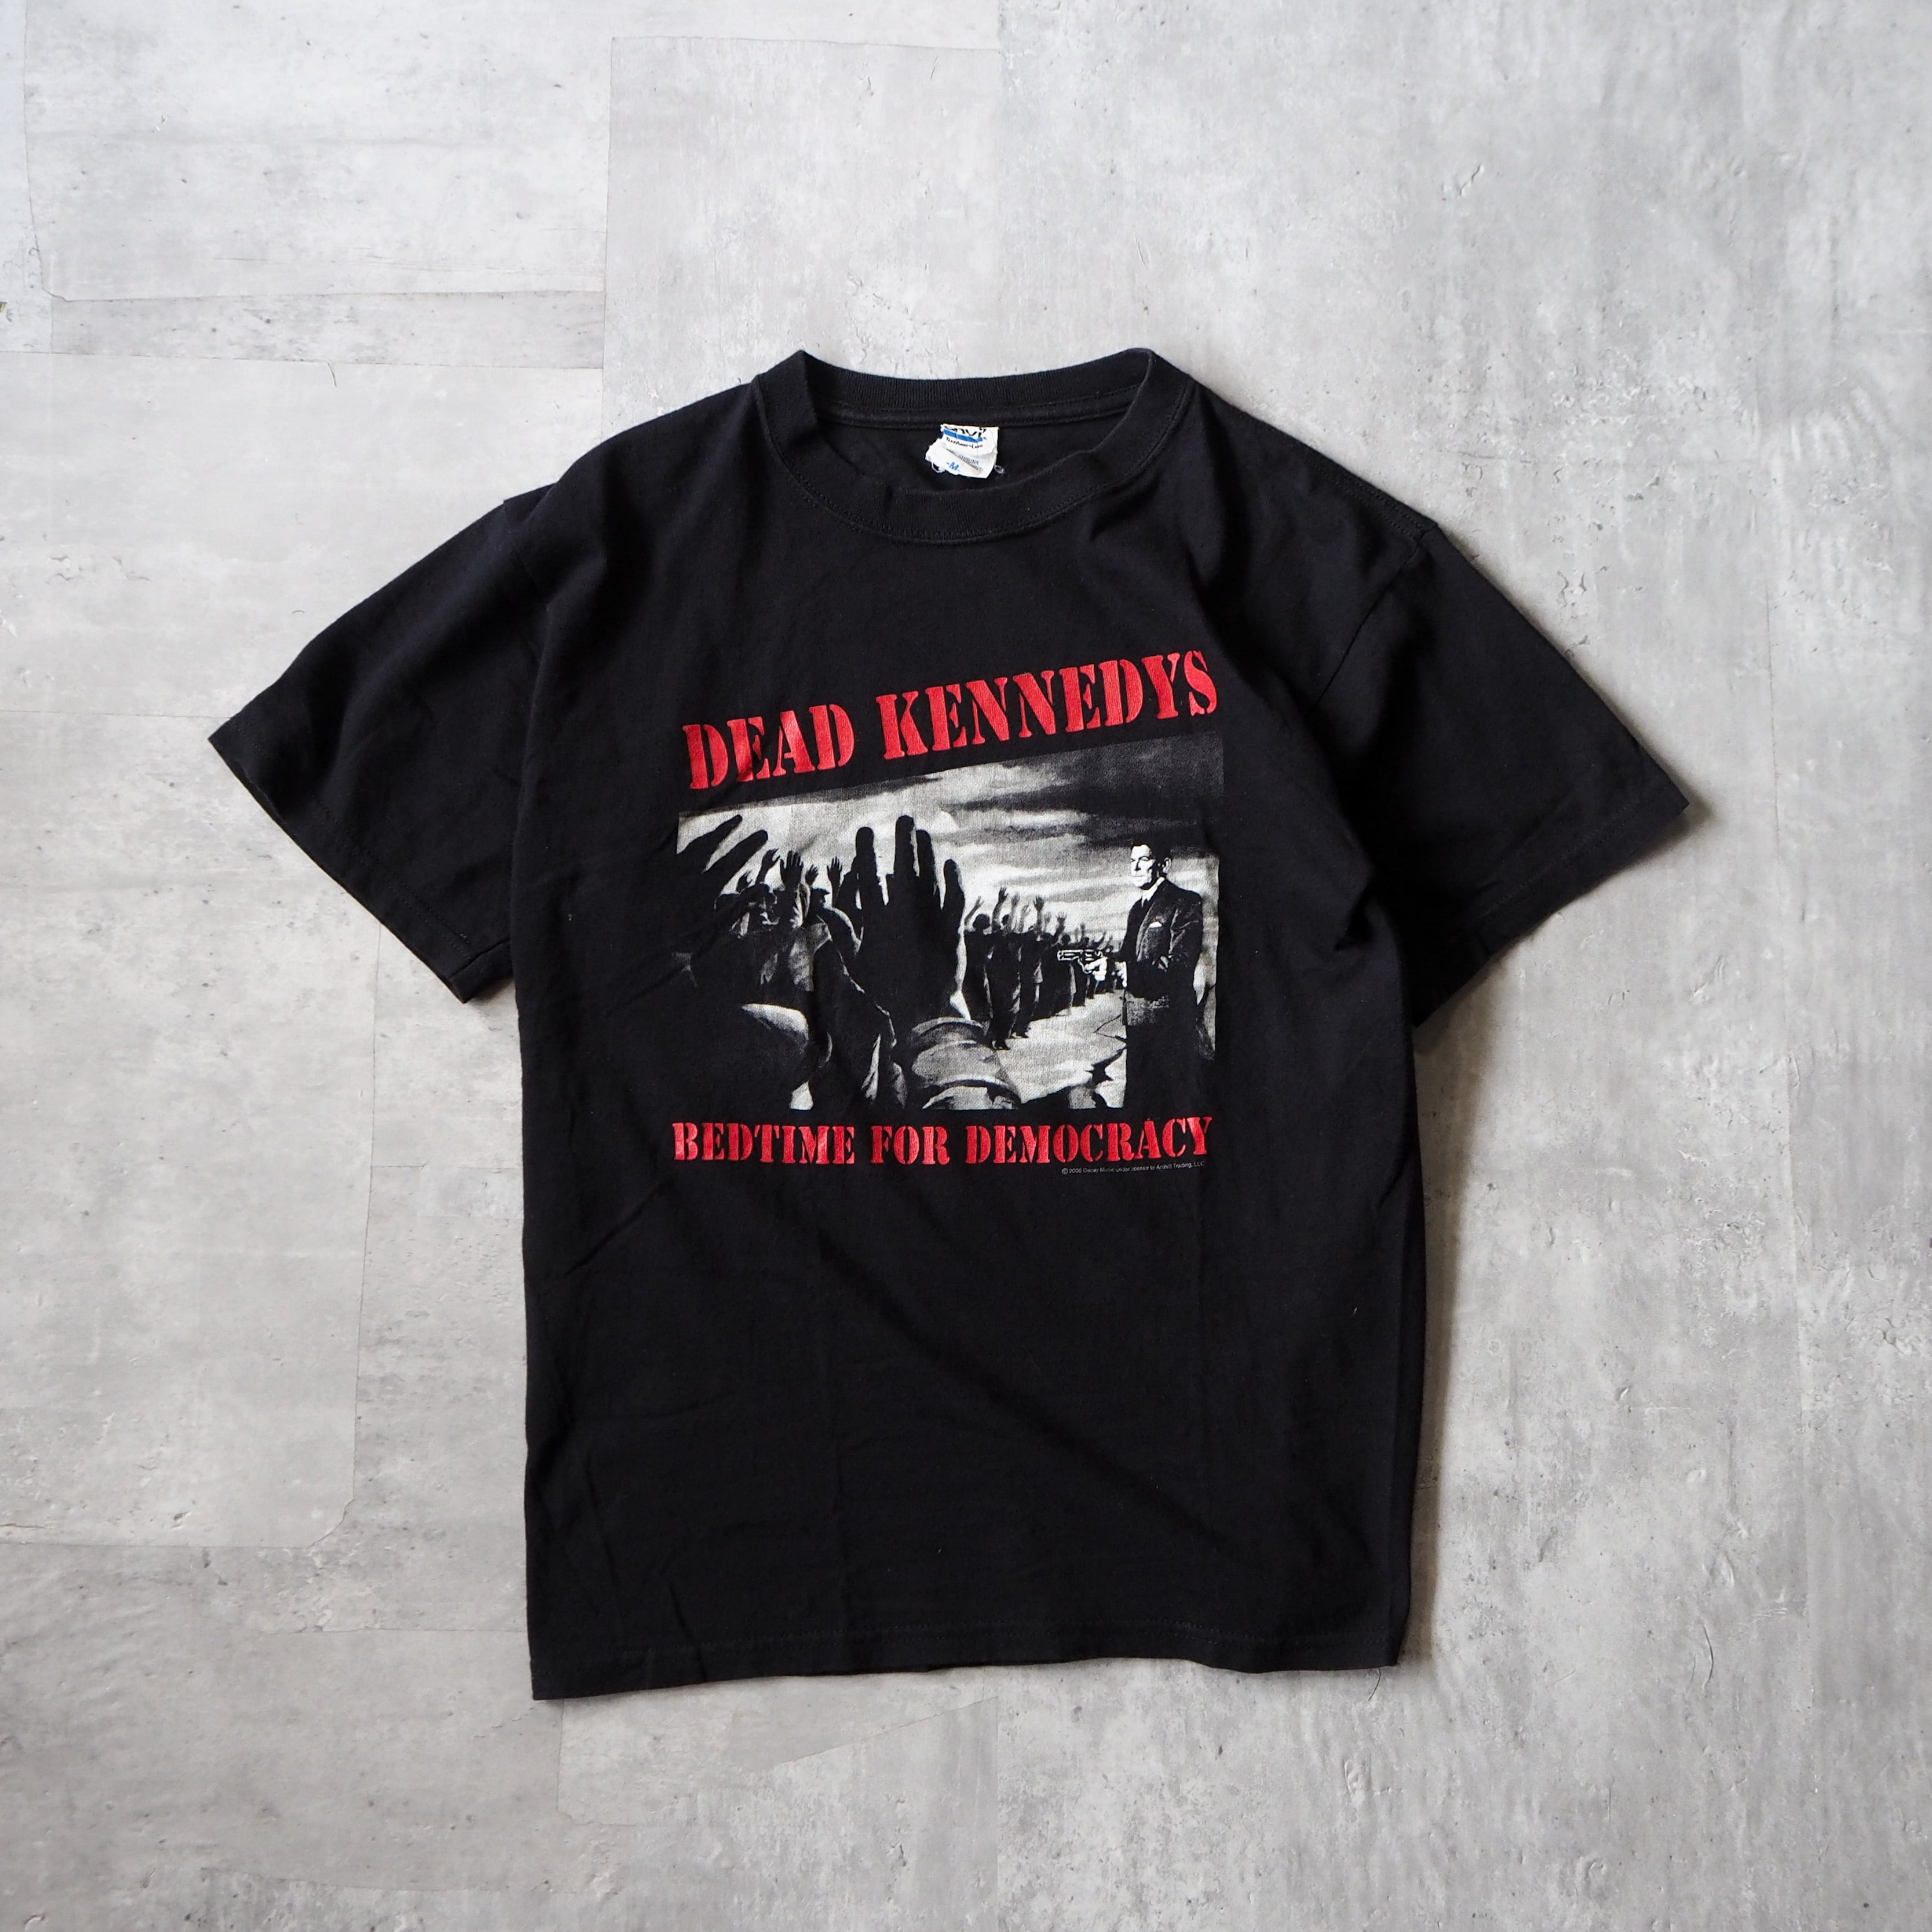 00s “DEAD KENNEDYS” bedtime for democracy band tee 00年代 デッドケネディーズ バンド tシャツ  ブラック 野村訓市